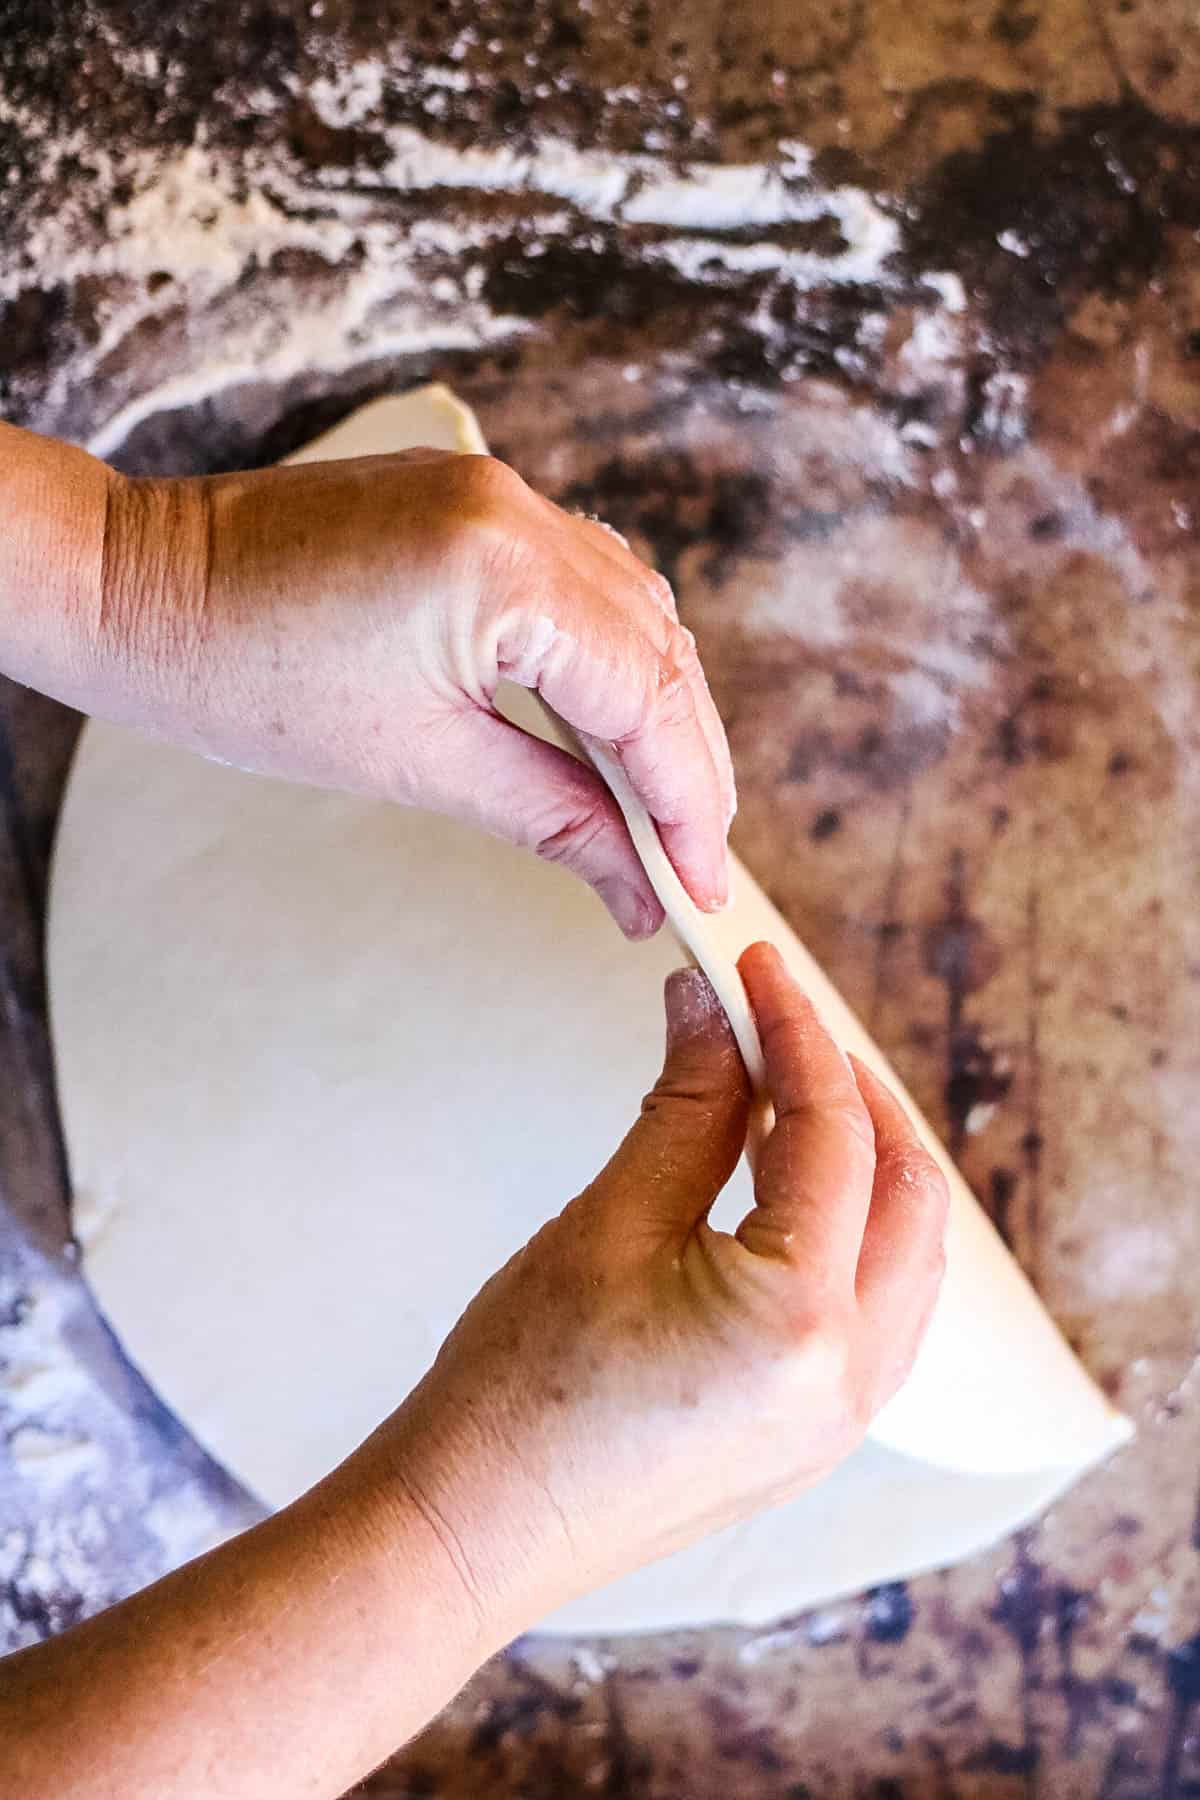 A person preparing rugelach dough on a table.